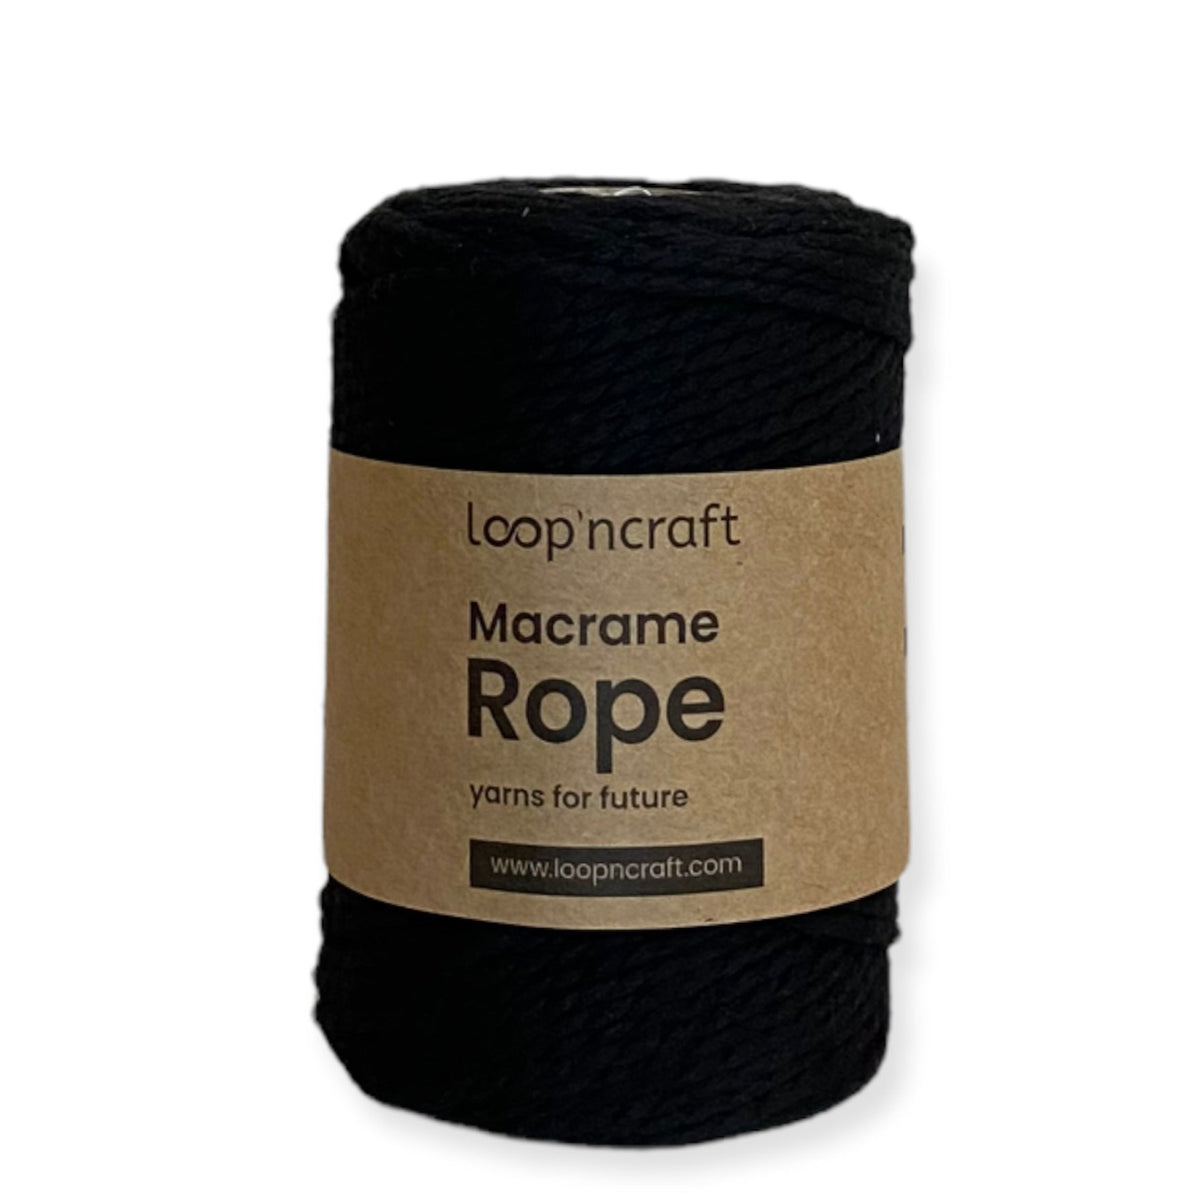 Macrame Rope 3mm 500g